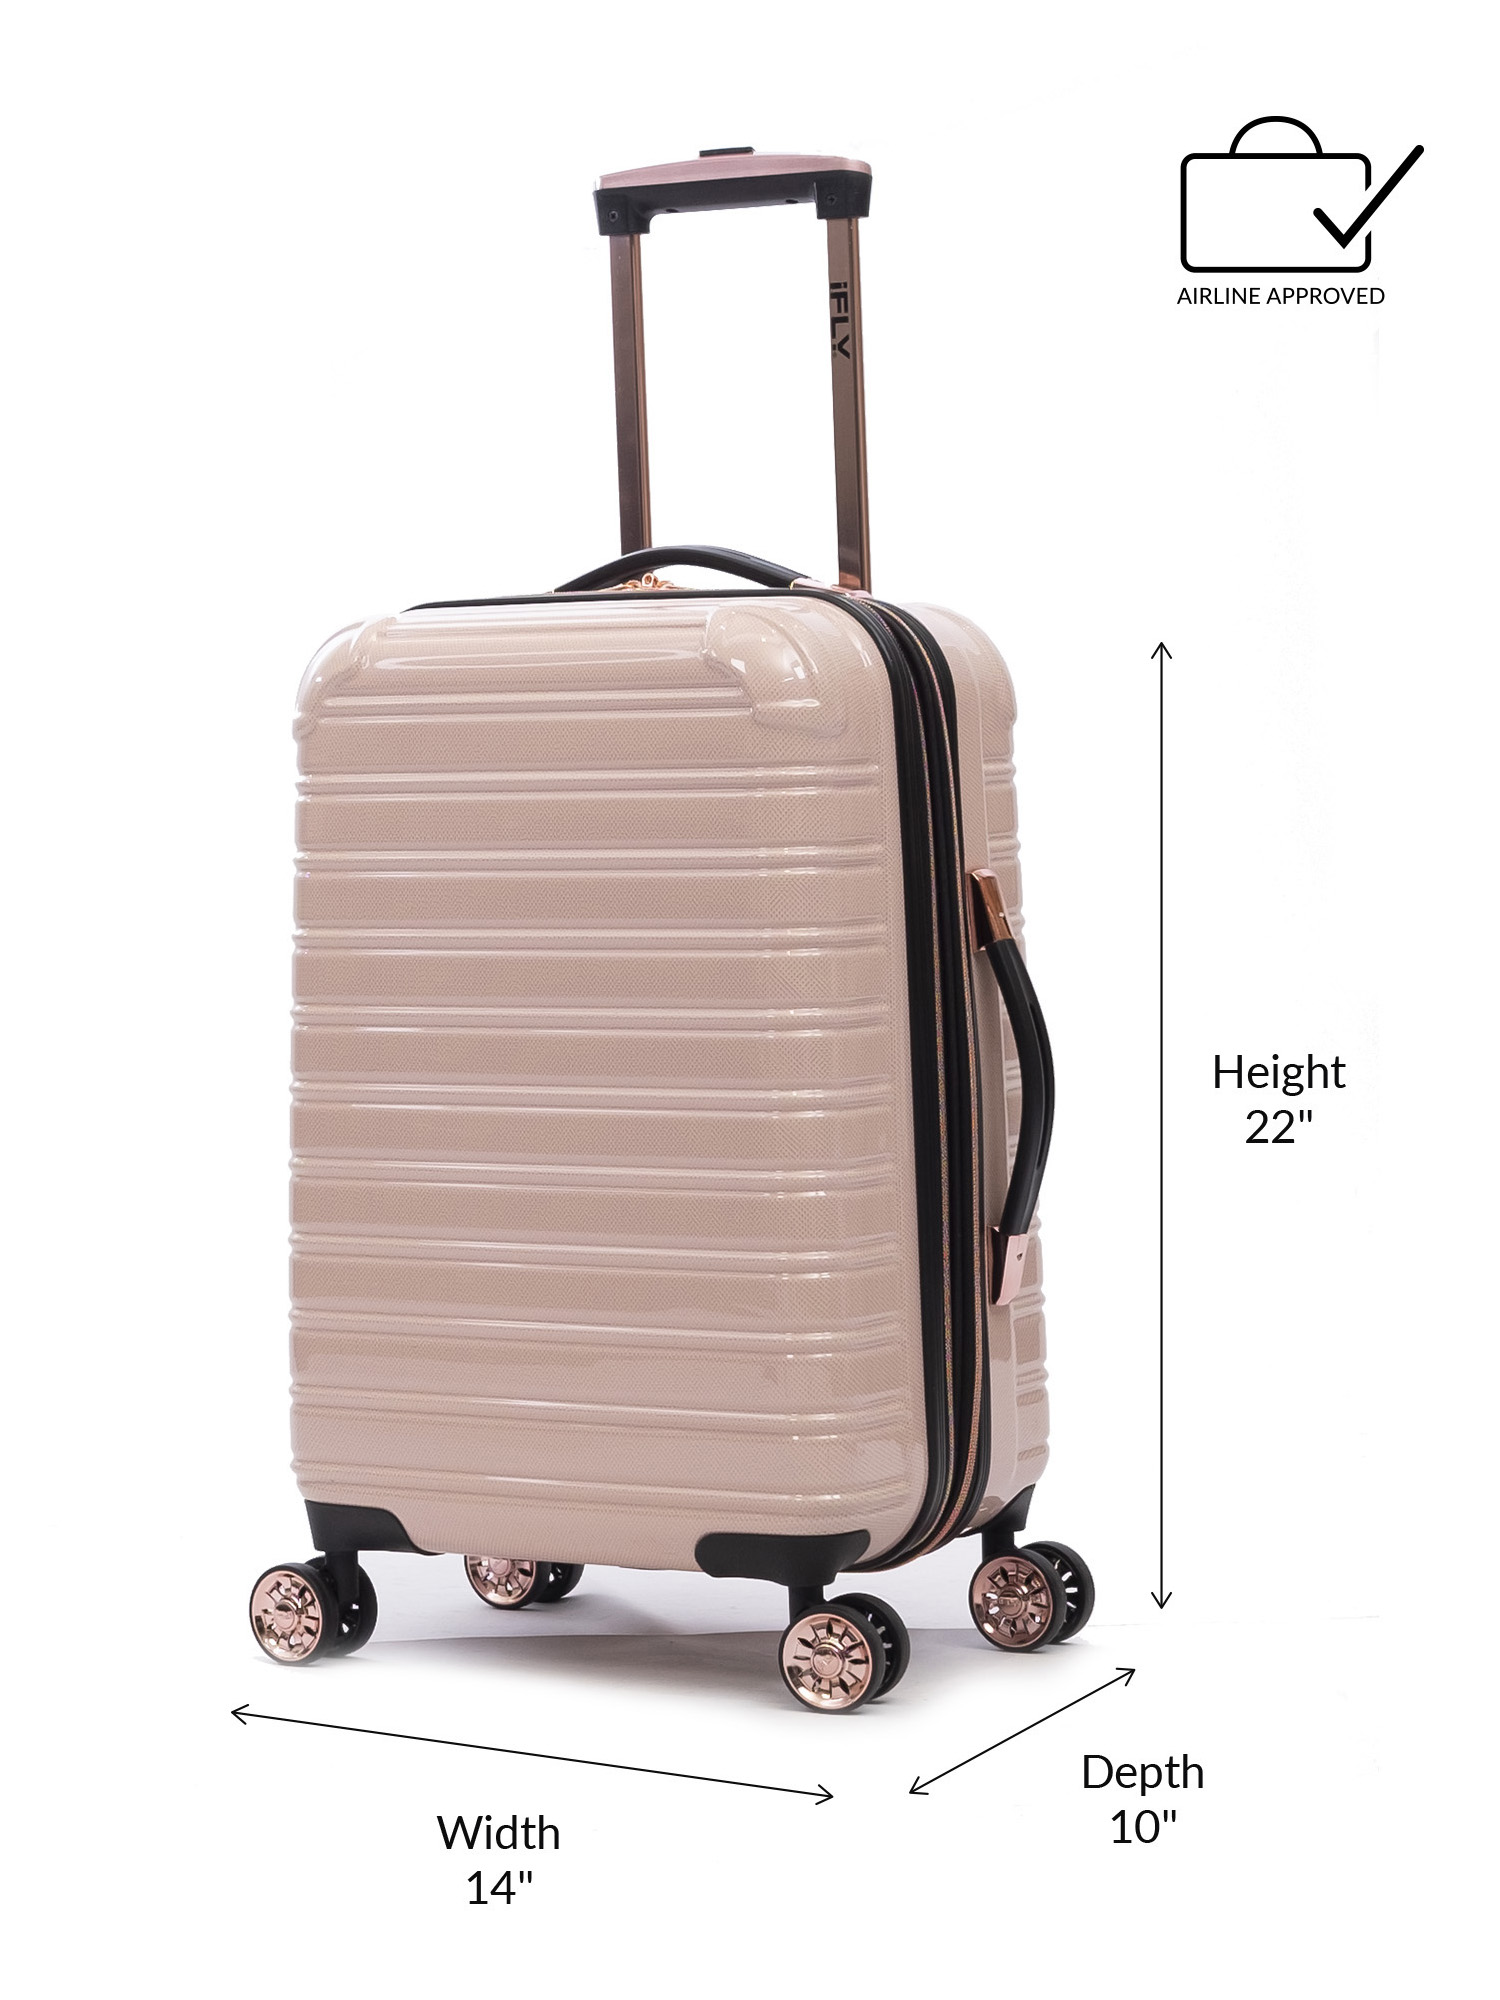 iFLY Hardside Luggage Fibertech 20 Inch Carry-on, Blush/Rose Gold - image 2 of 8